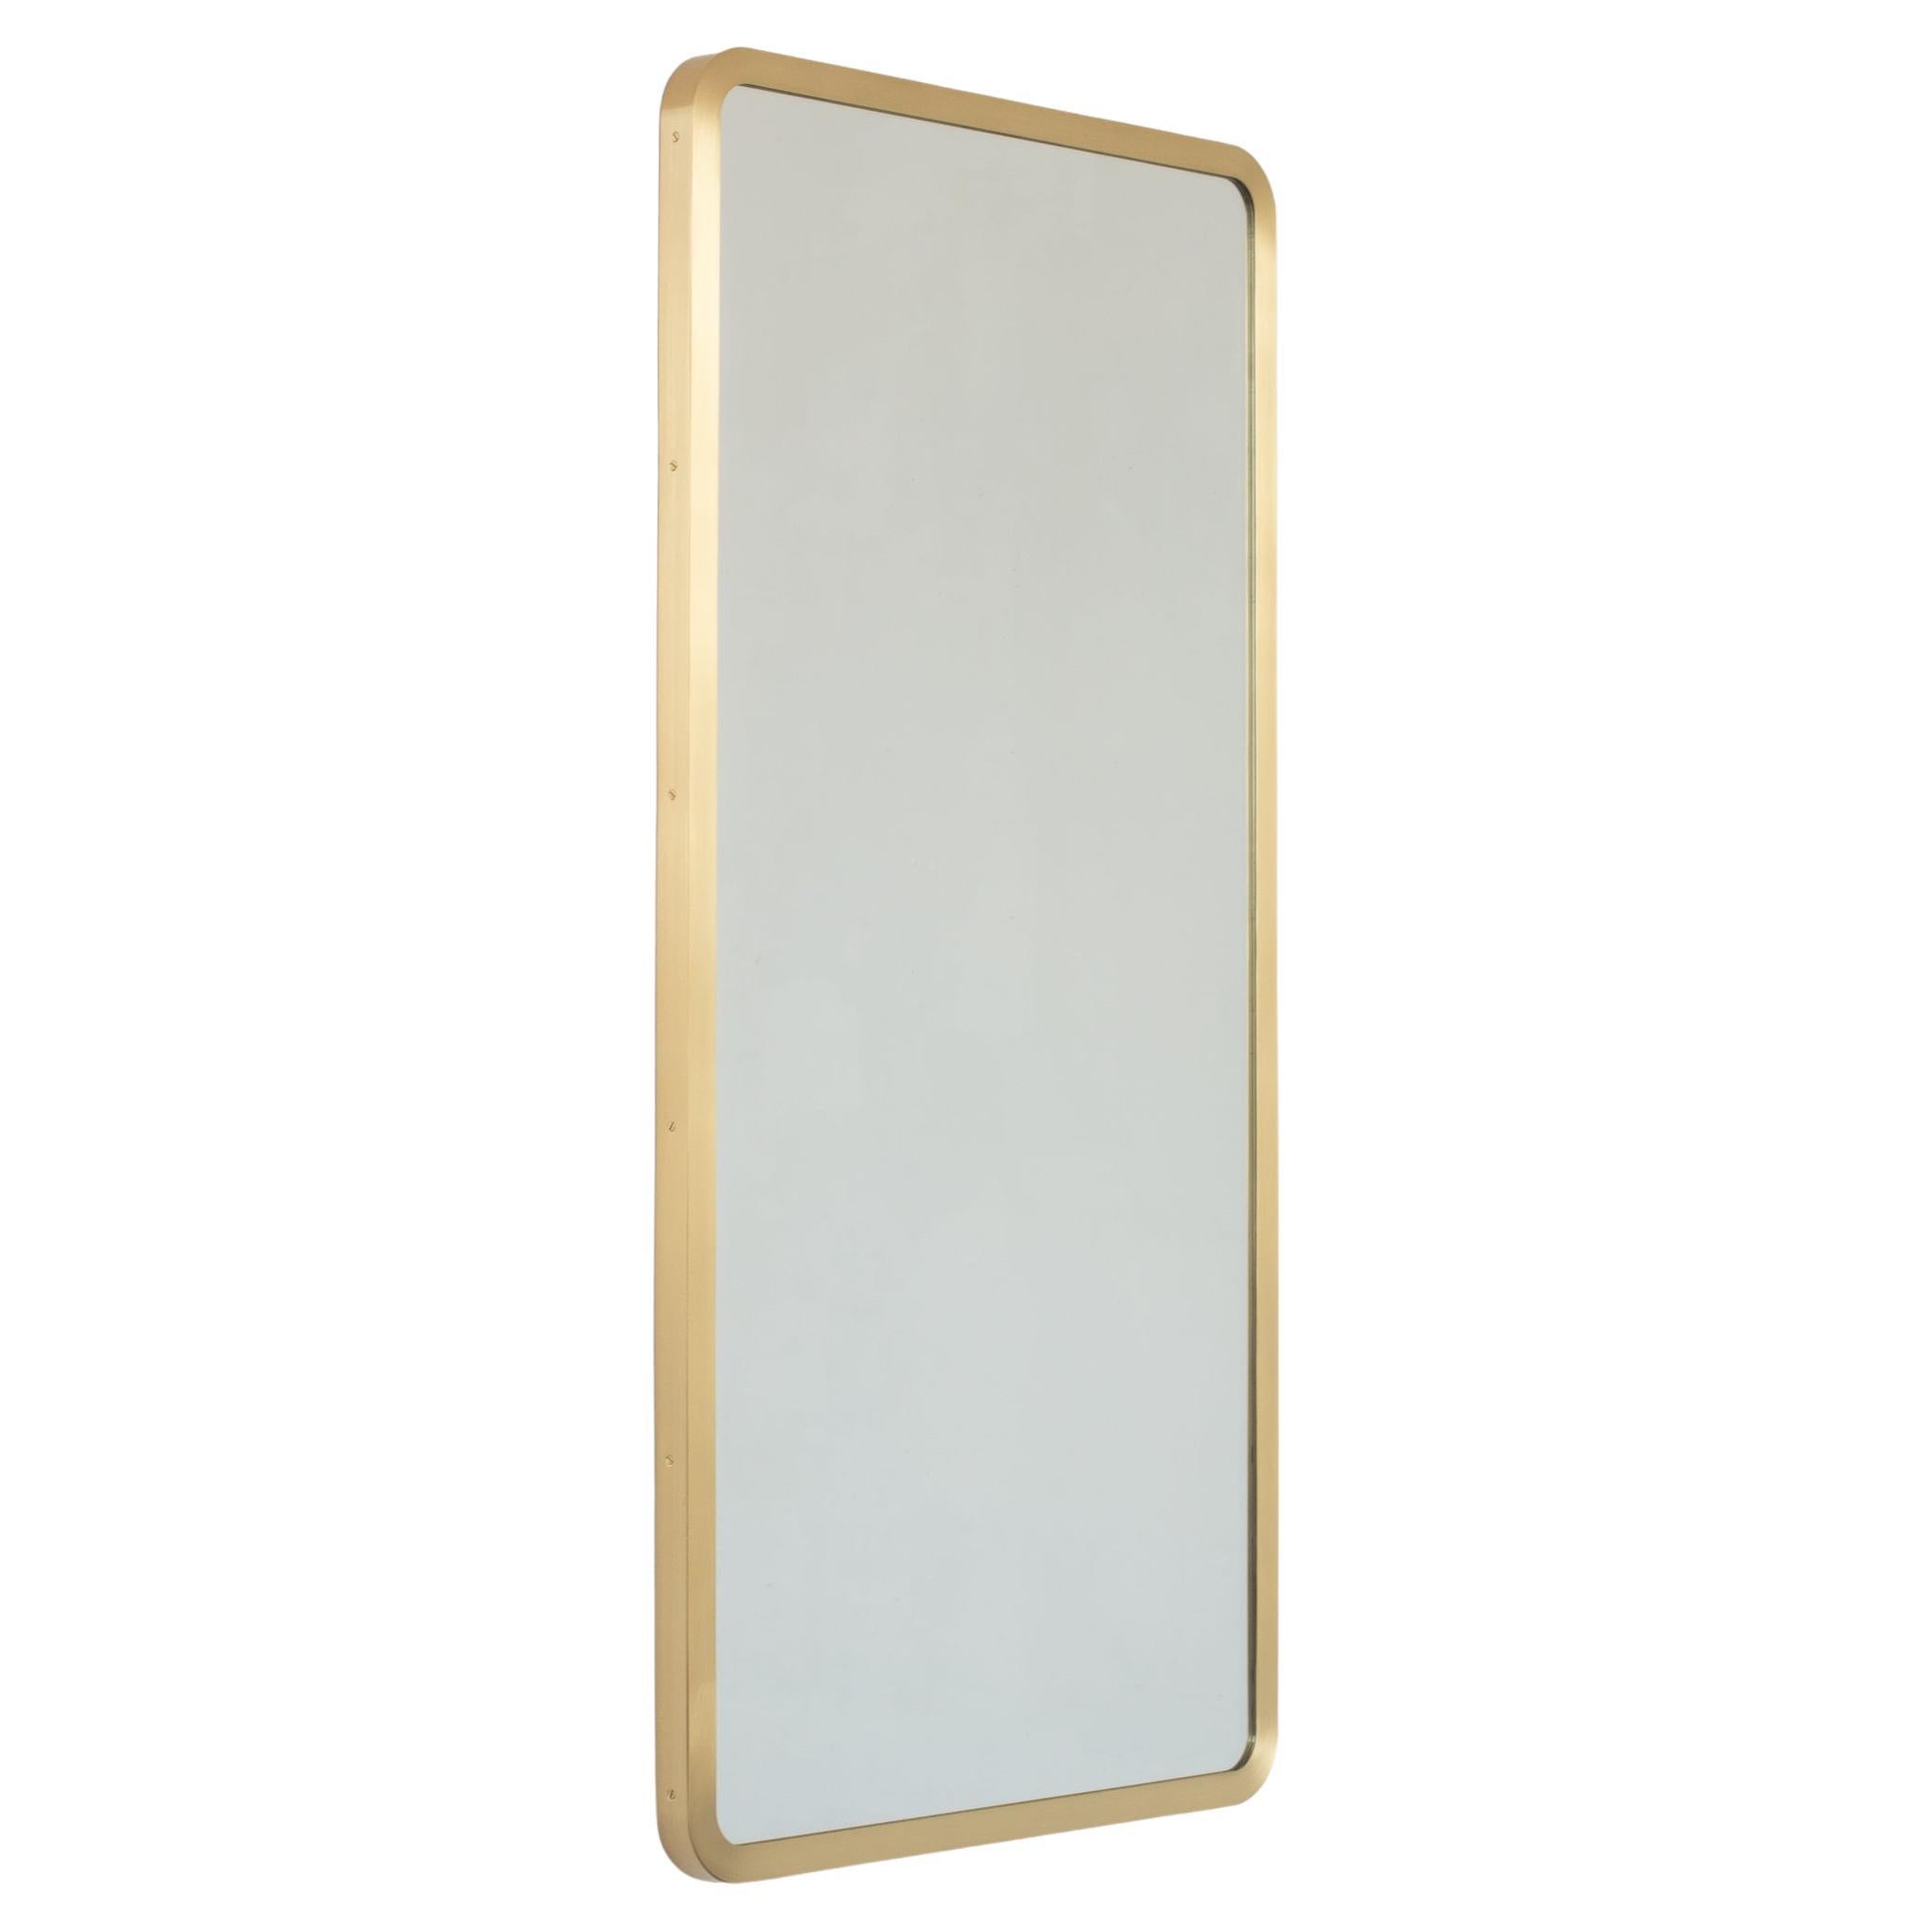 Quadris Rectangular Modern Wall Mirror with Brass Full Frame, XL